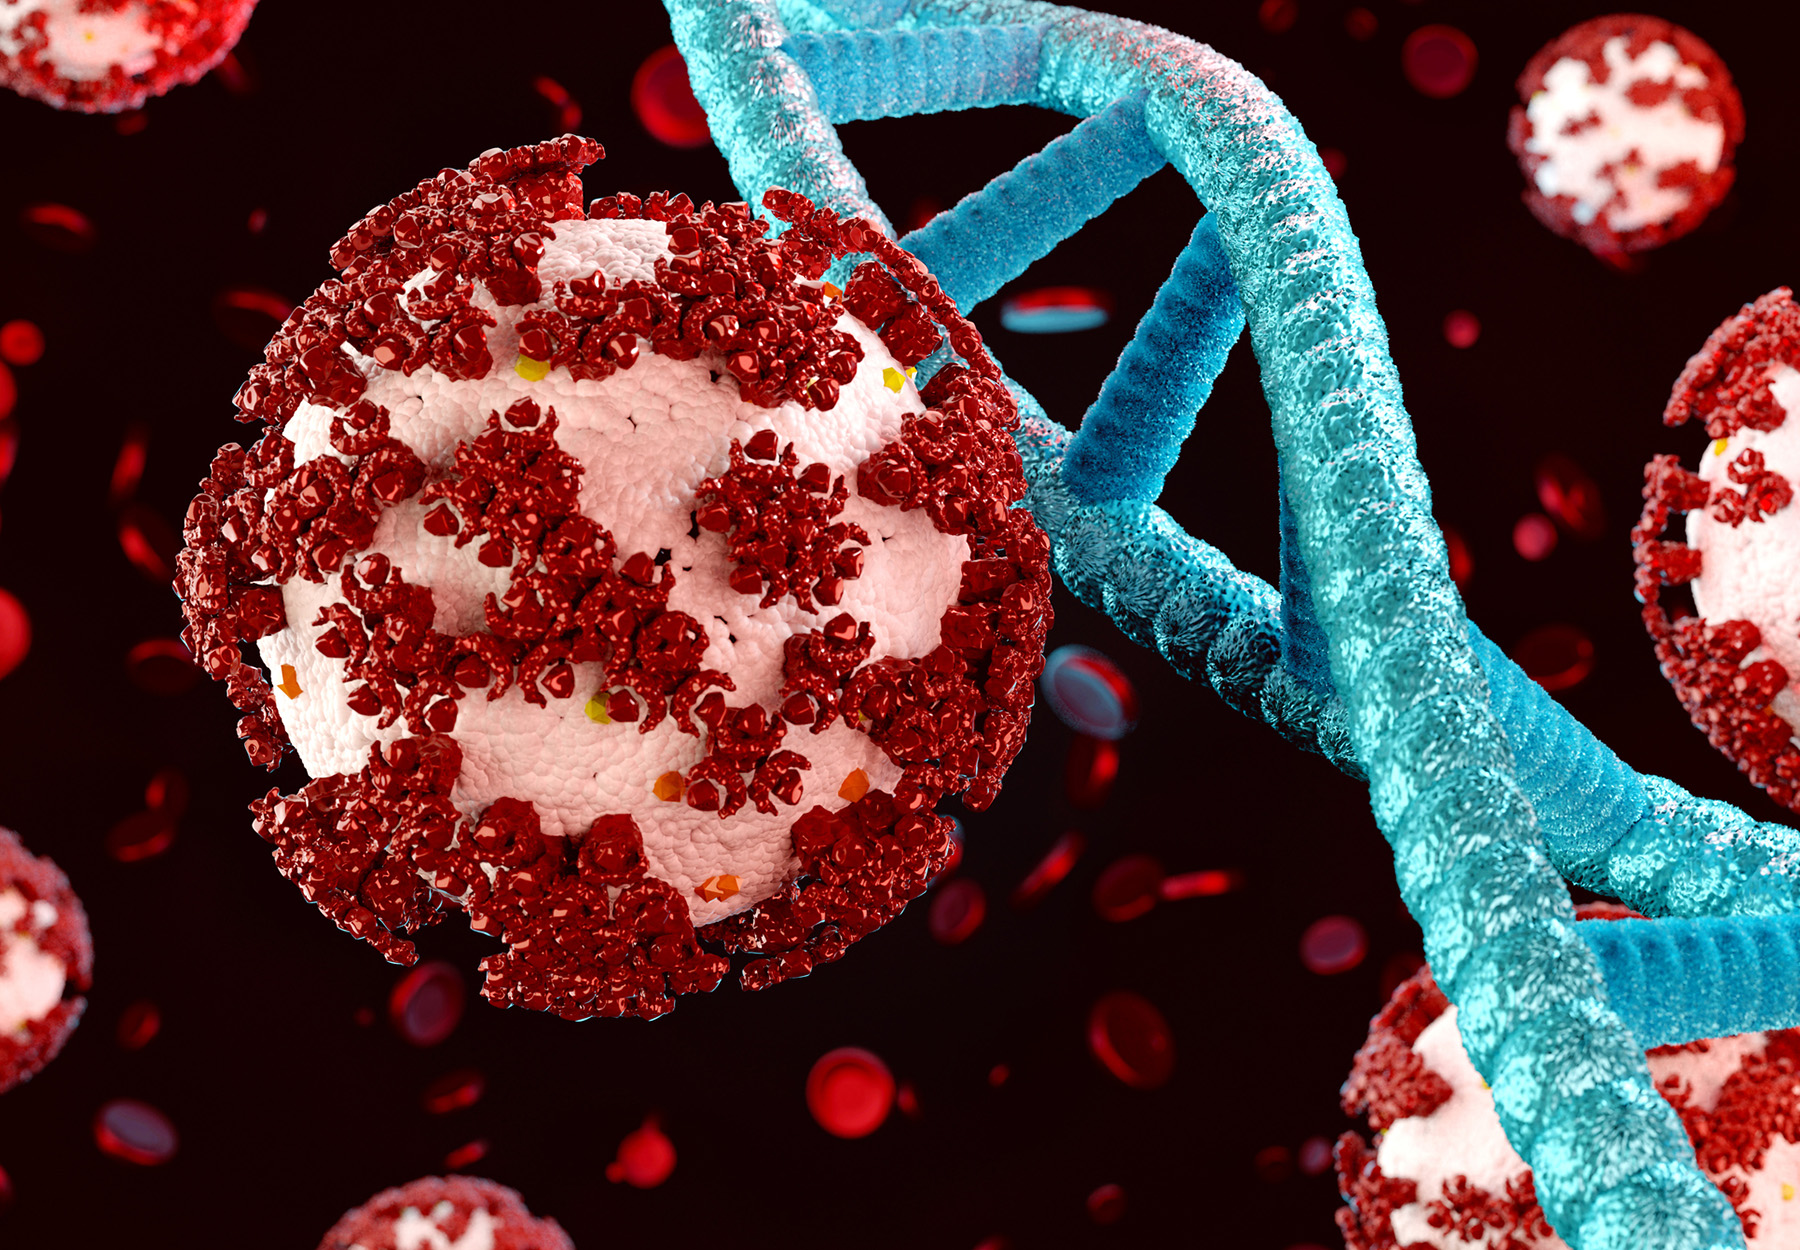 Microscopic view Coronavirus Covid-19 and DNA stock illustration